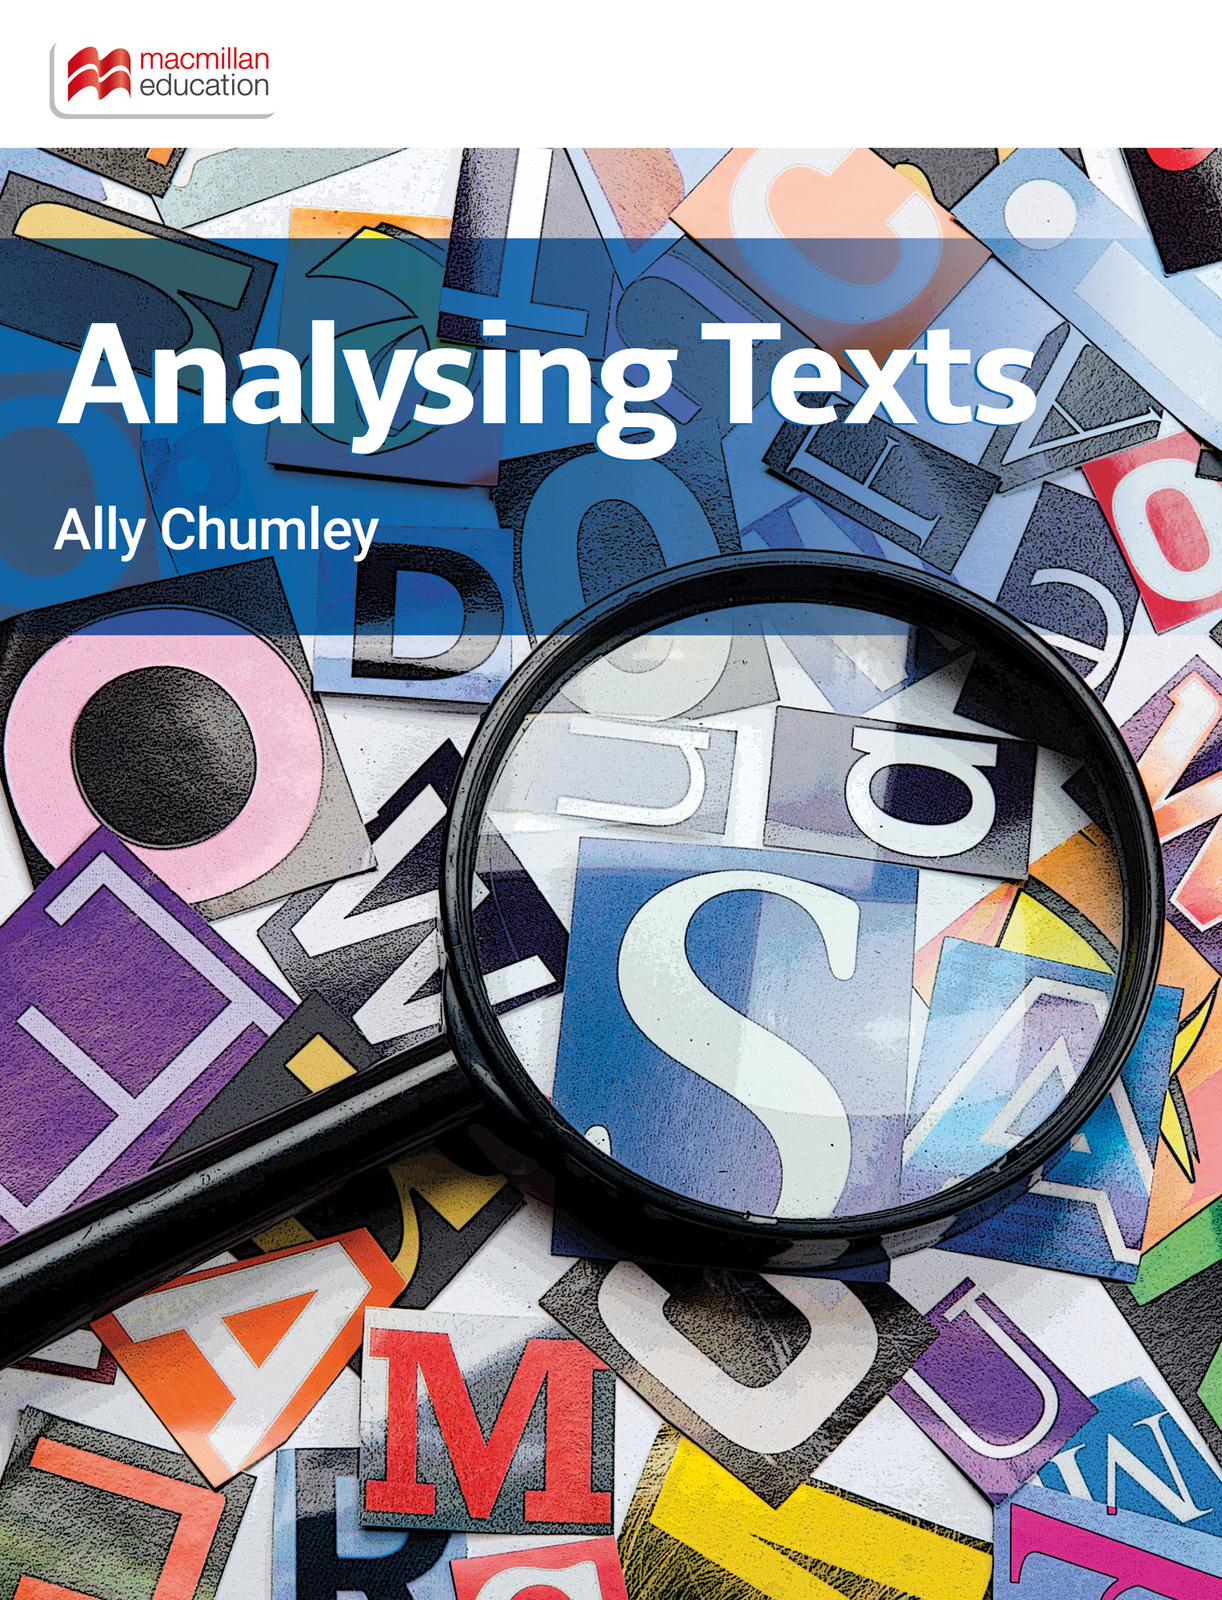 Analysing Texts (Print & Digital) - Macmillan Educational Resources and ...